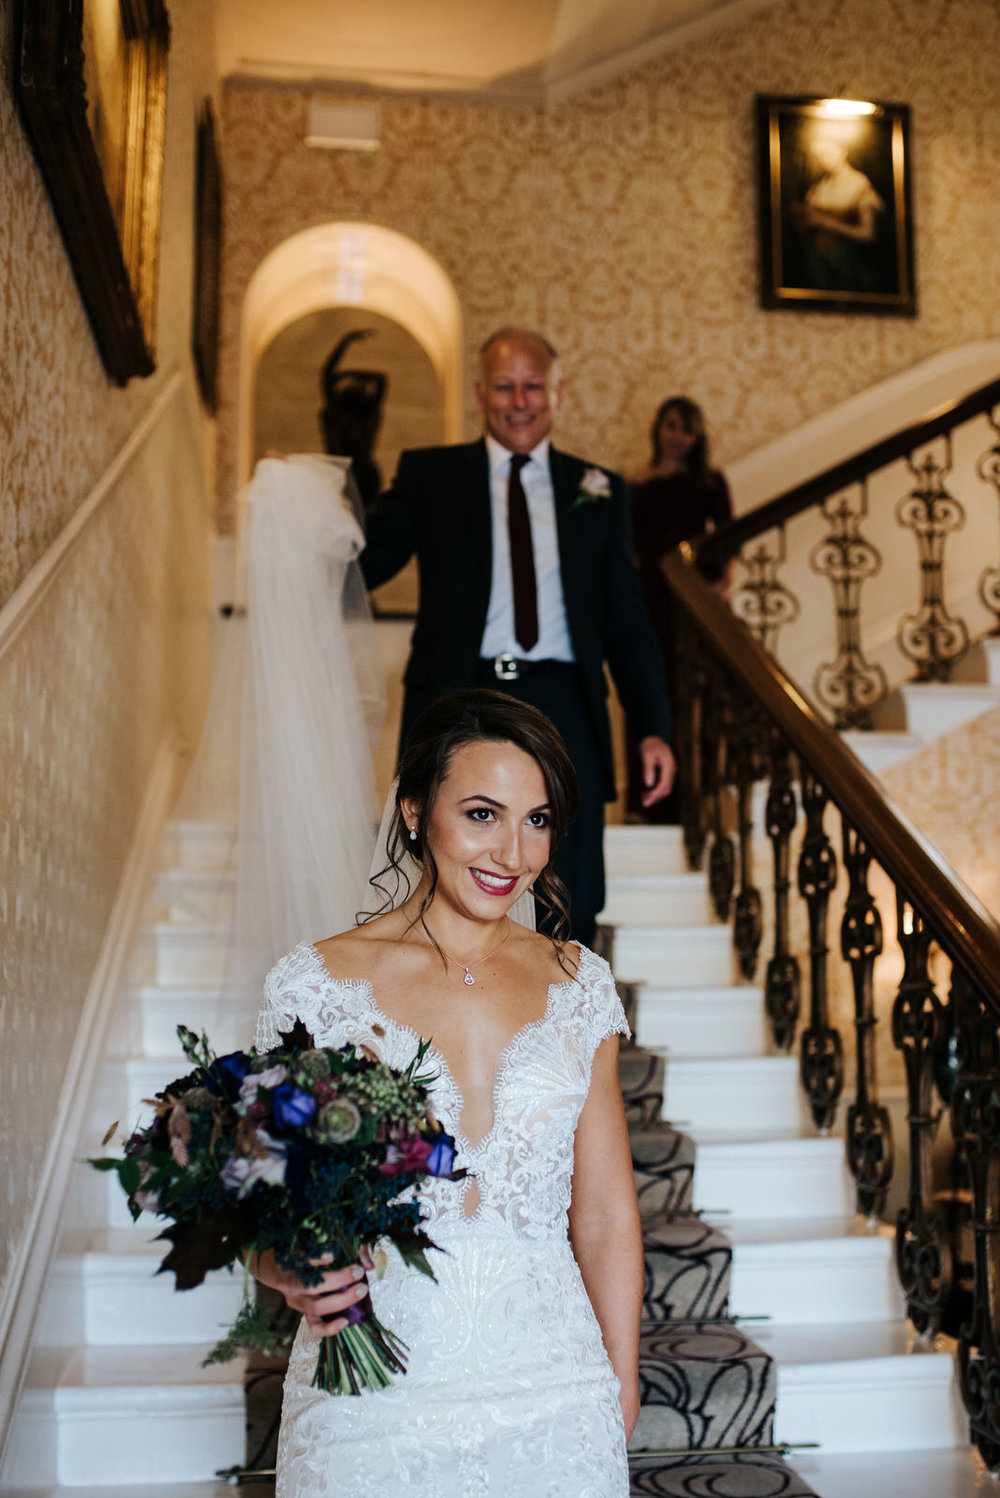 Bride walks down hotel stairs at The Petersham as step-dad holds her veil behind her